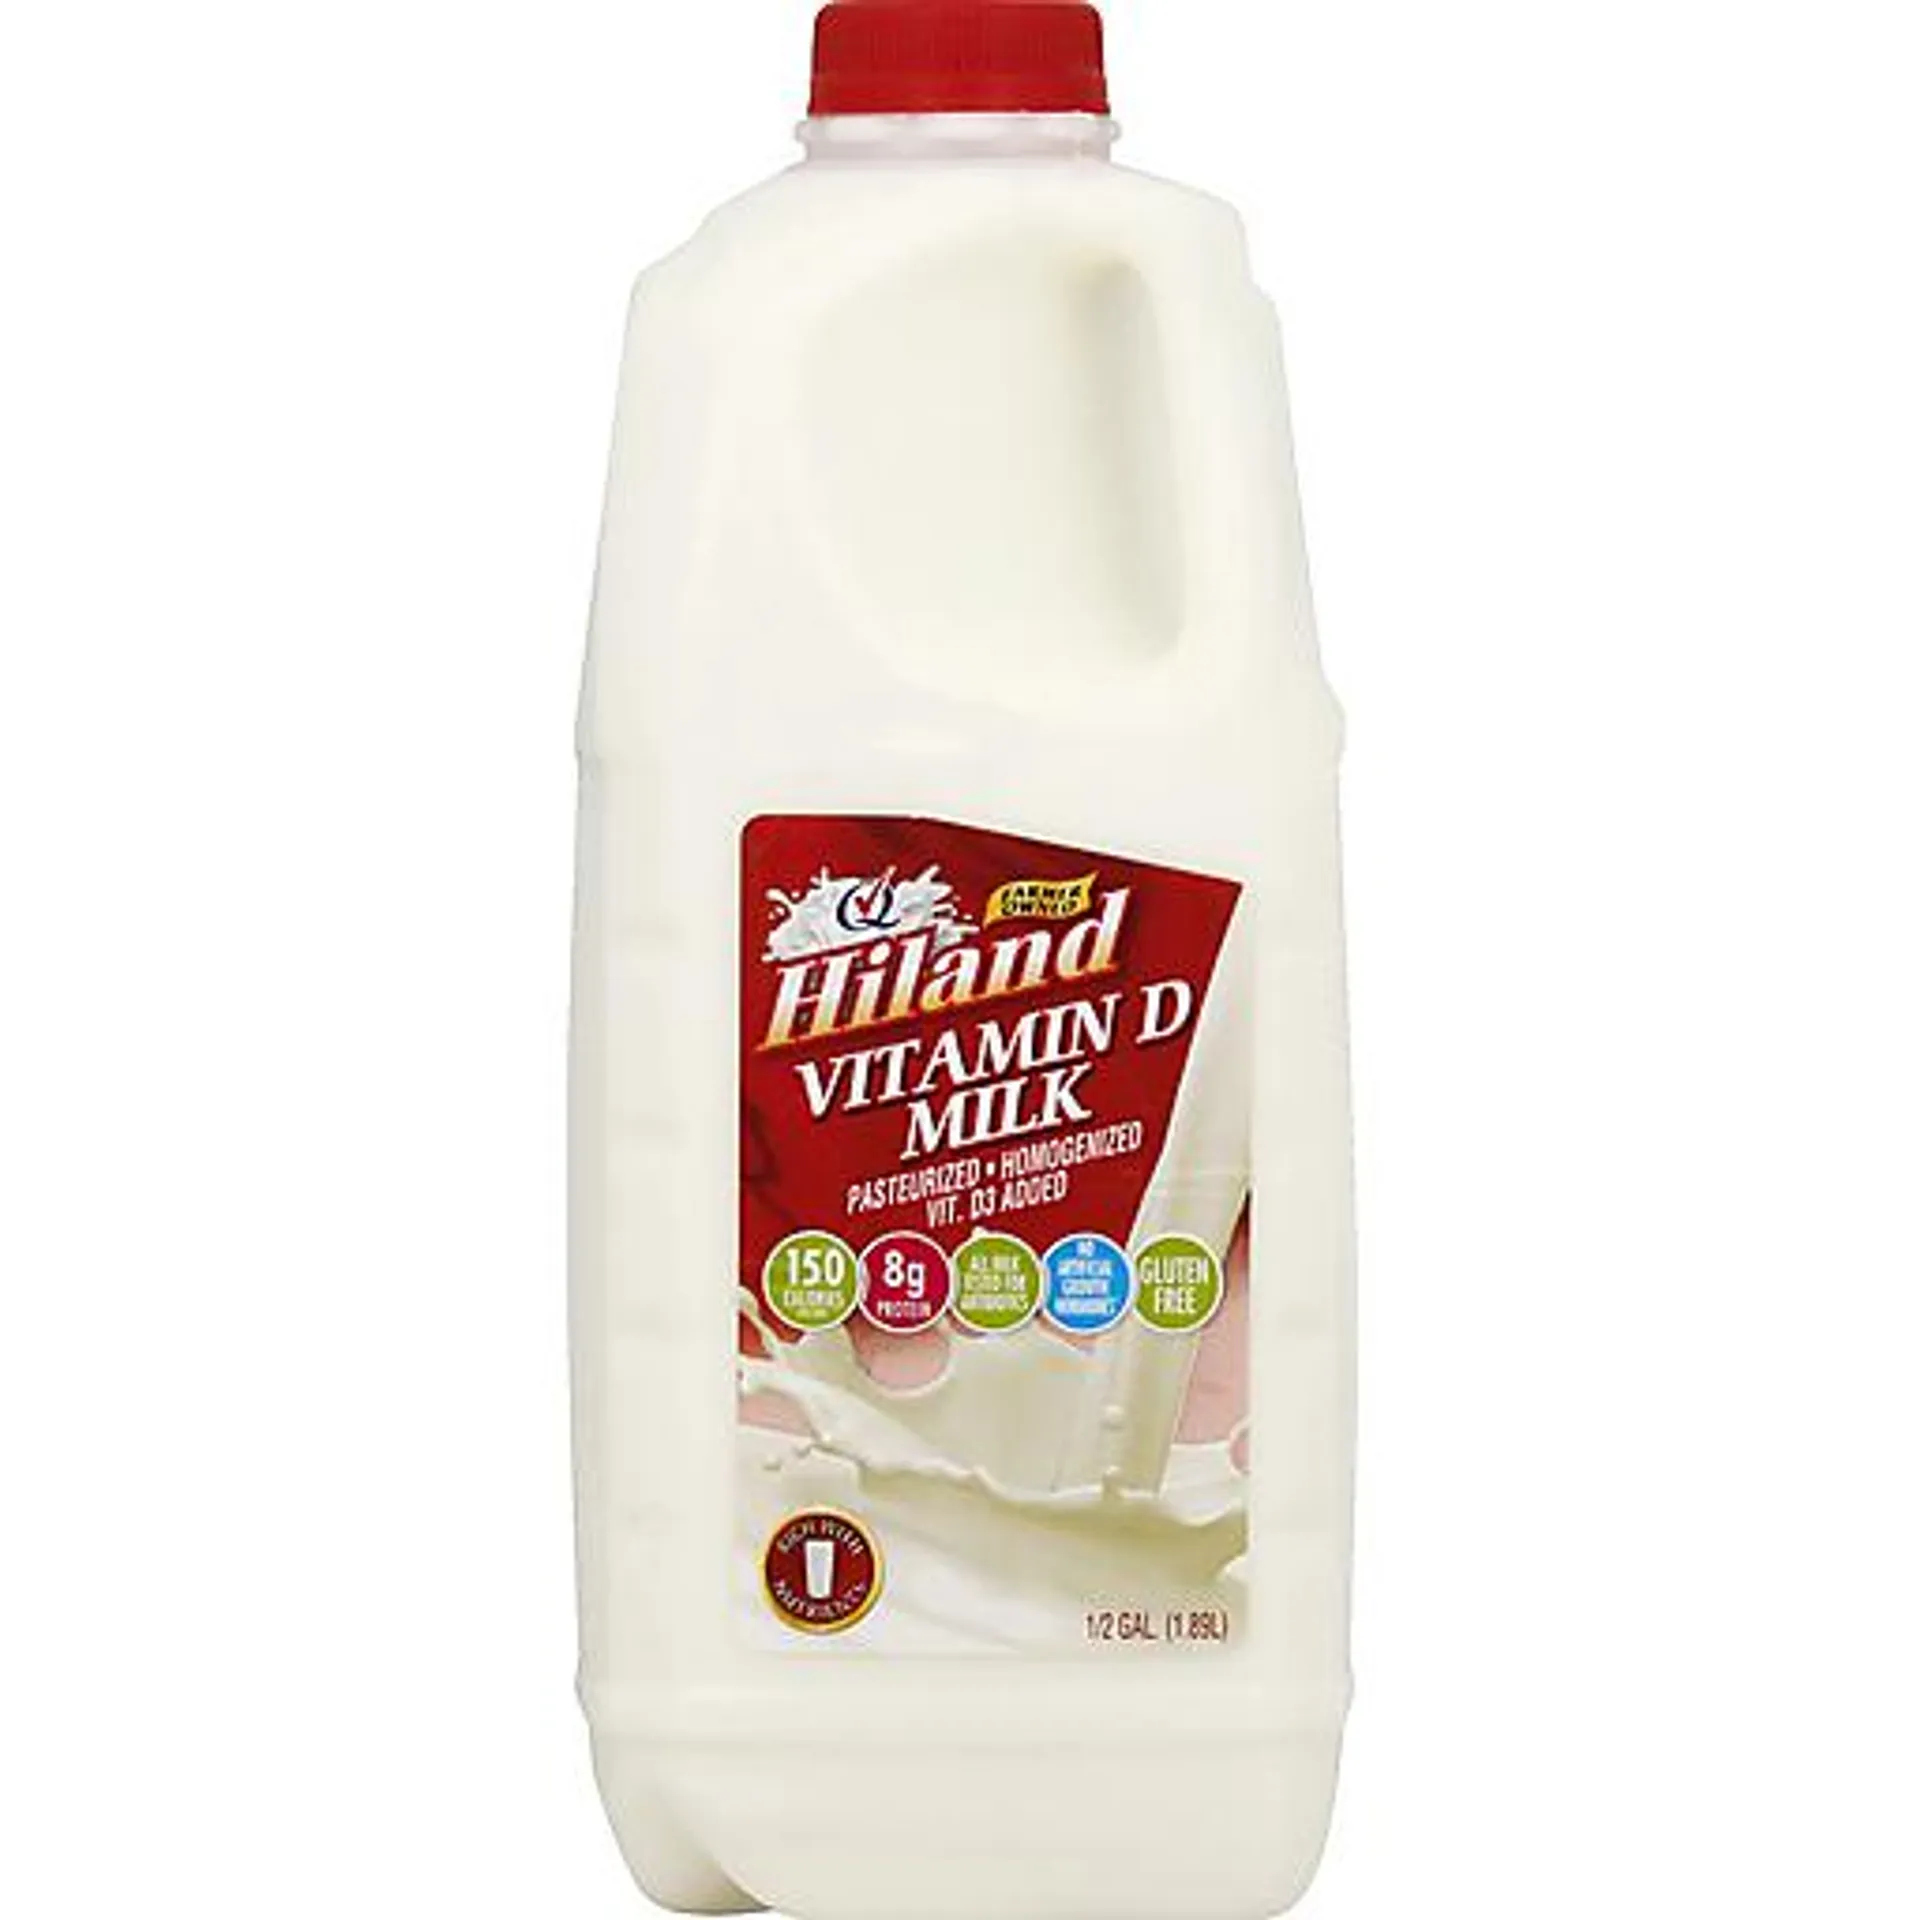 Hiland Milk, Vitamin D 0.5 Gal